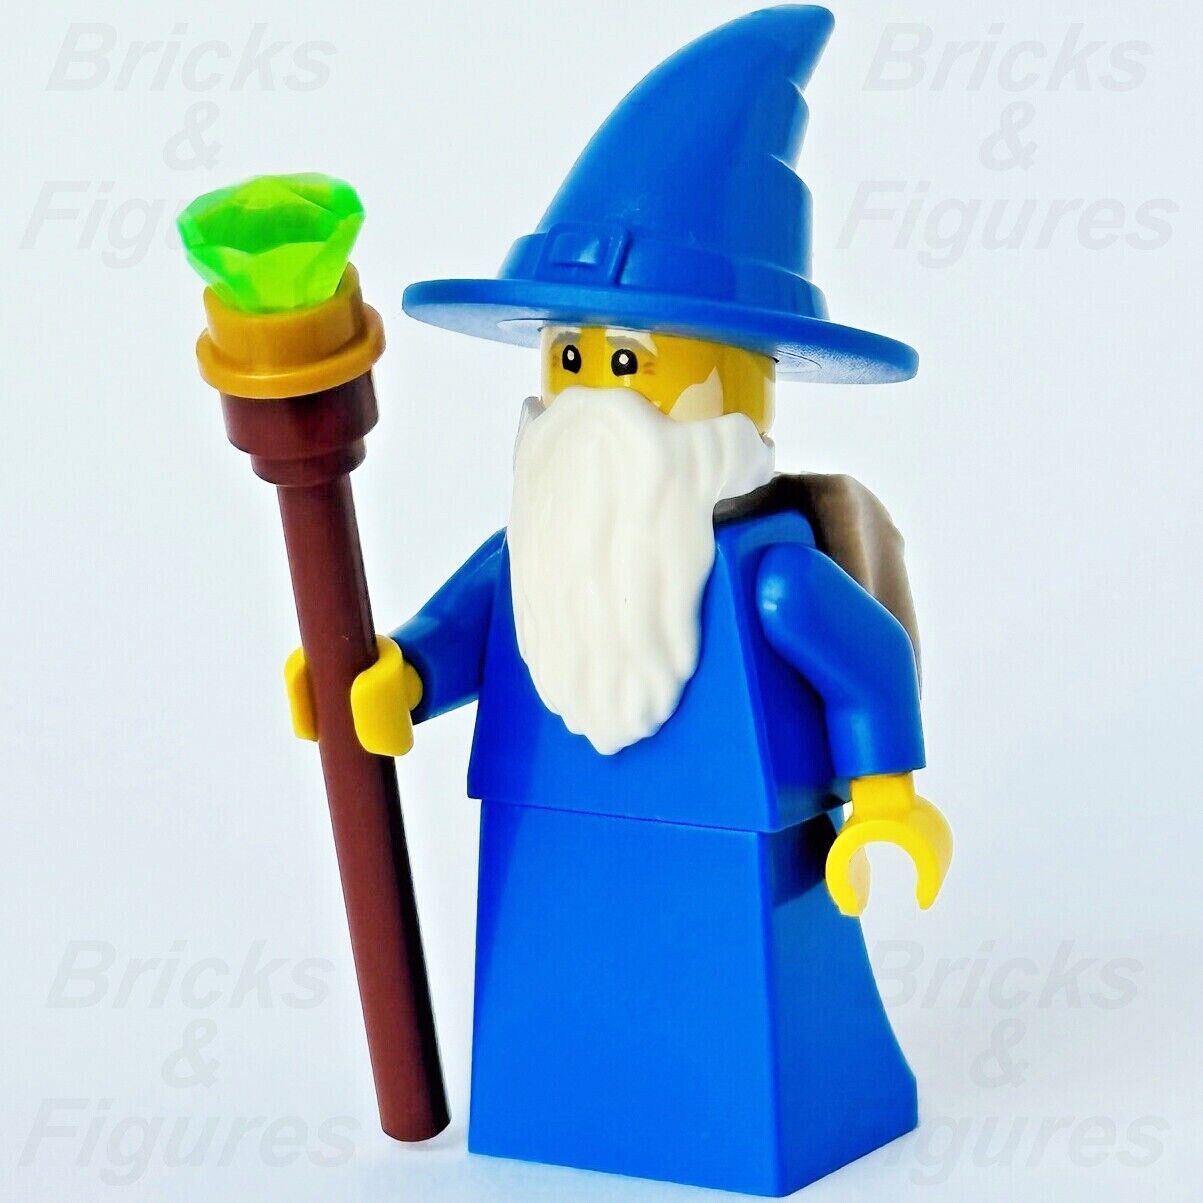 LEGO Majisto Wizard Castle Minifigure with Staff Lion Knights 10305 cas569 New - Bricks & Figures